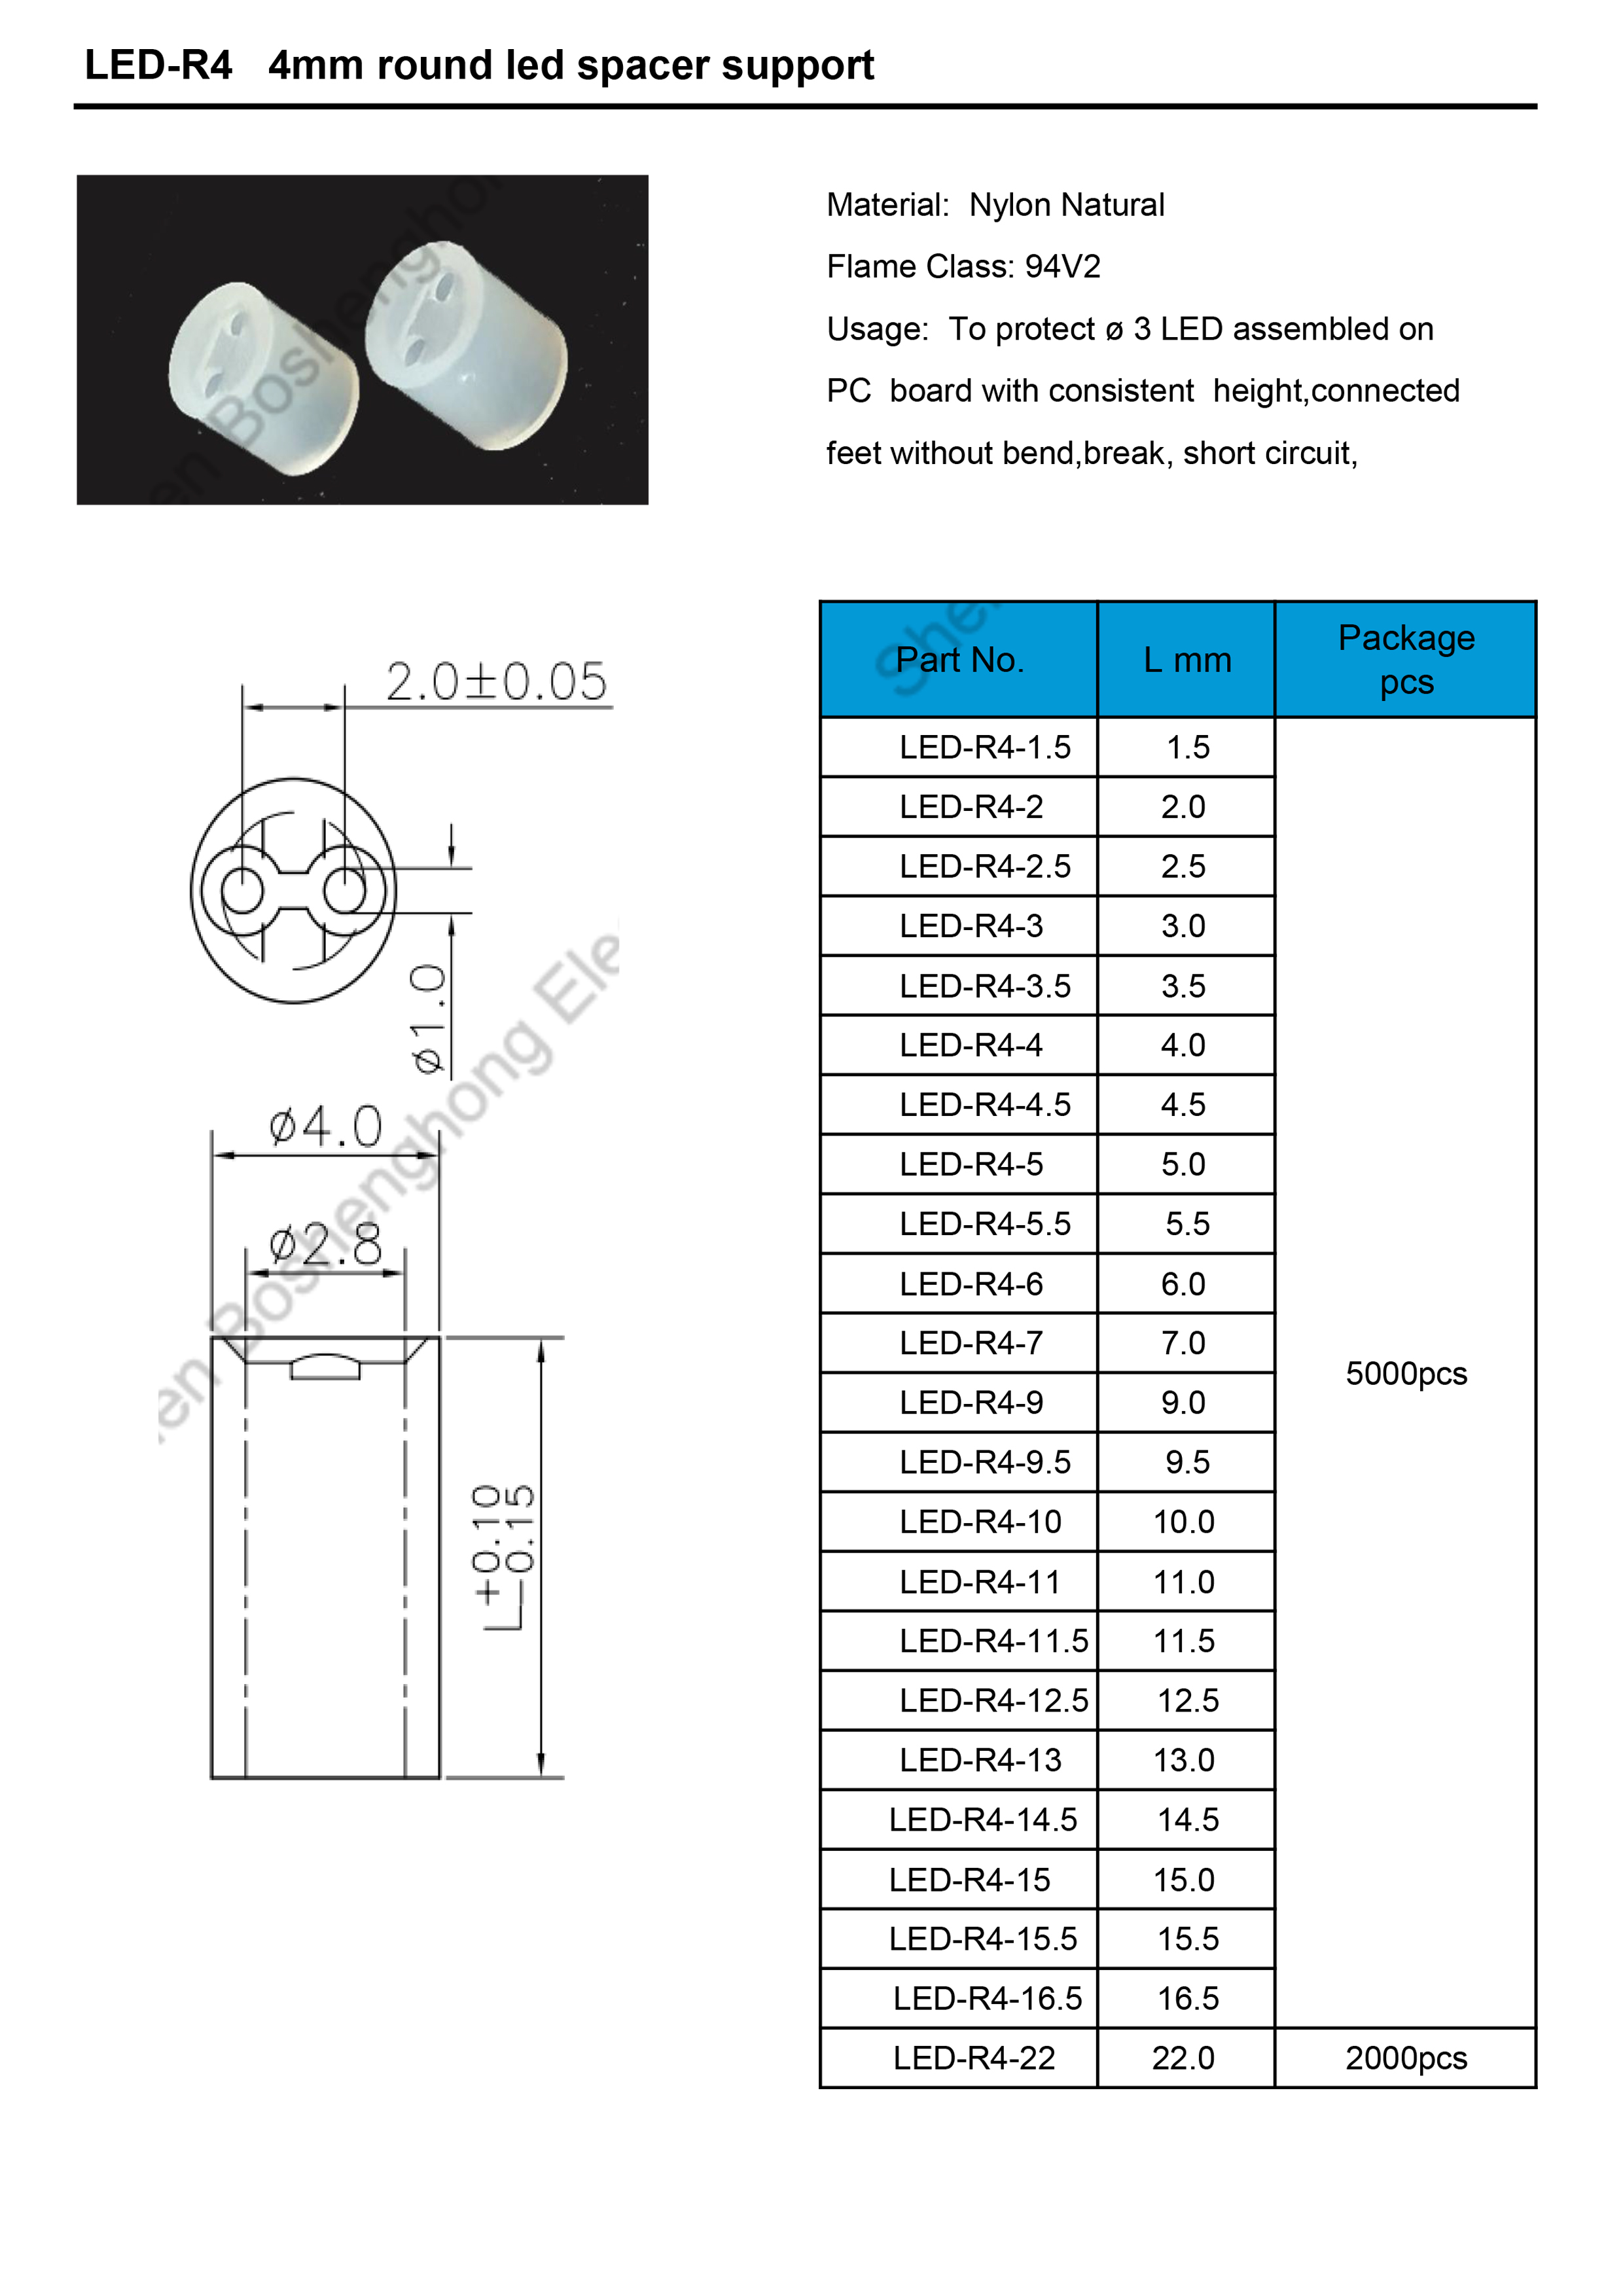 3-001 LED-R4 4mm LED spacer support specification.jpg